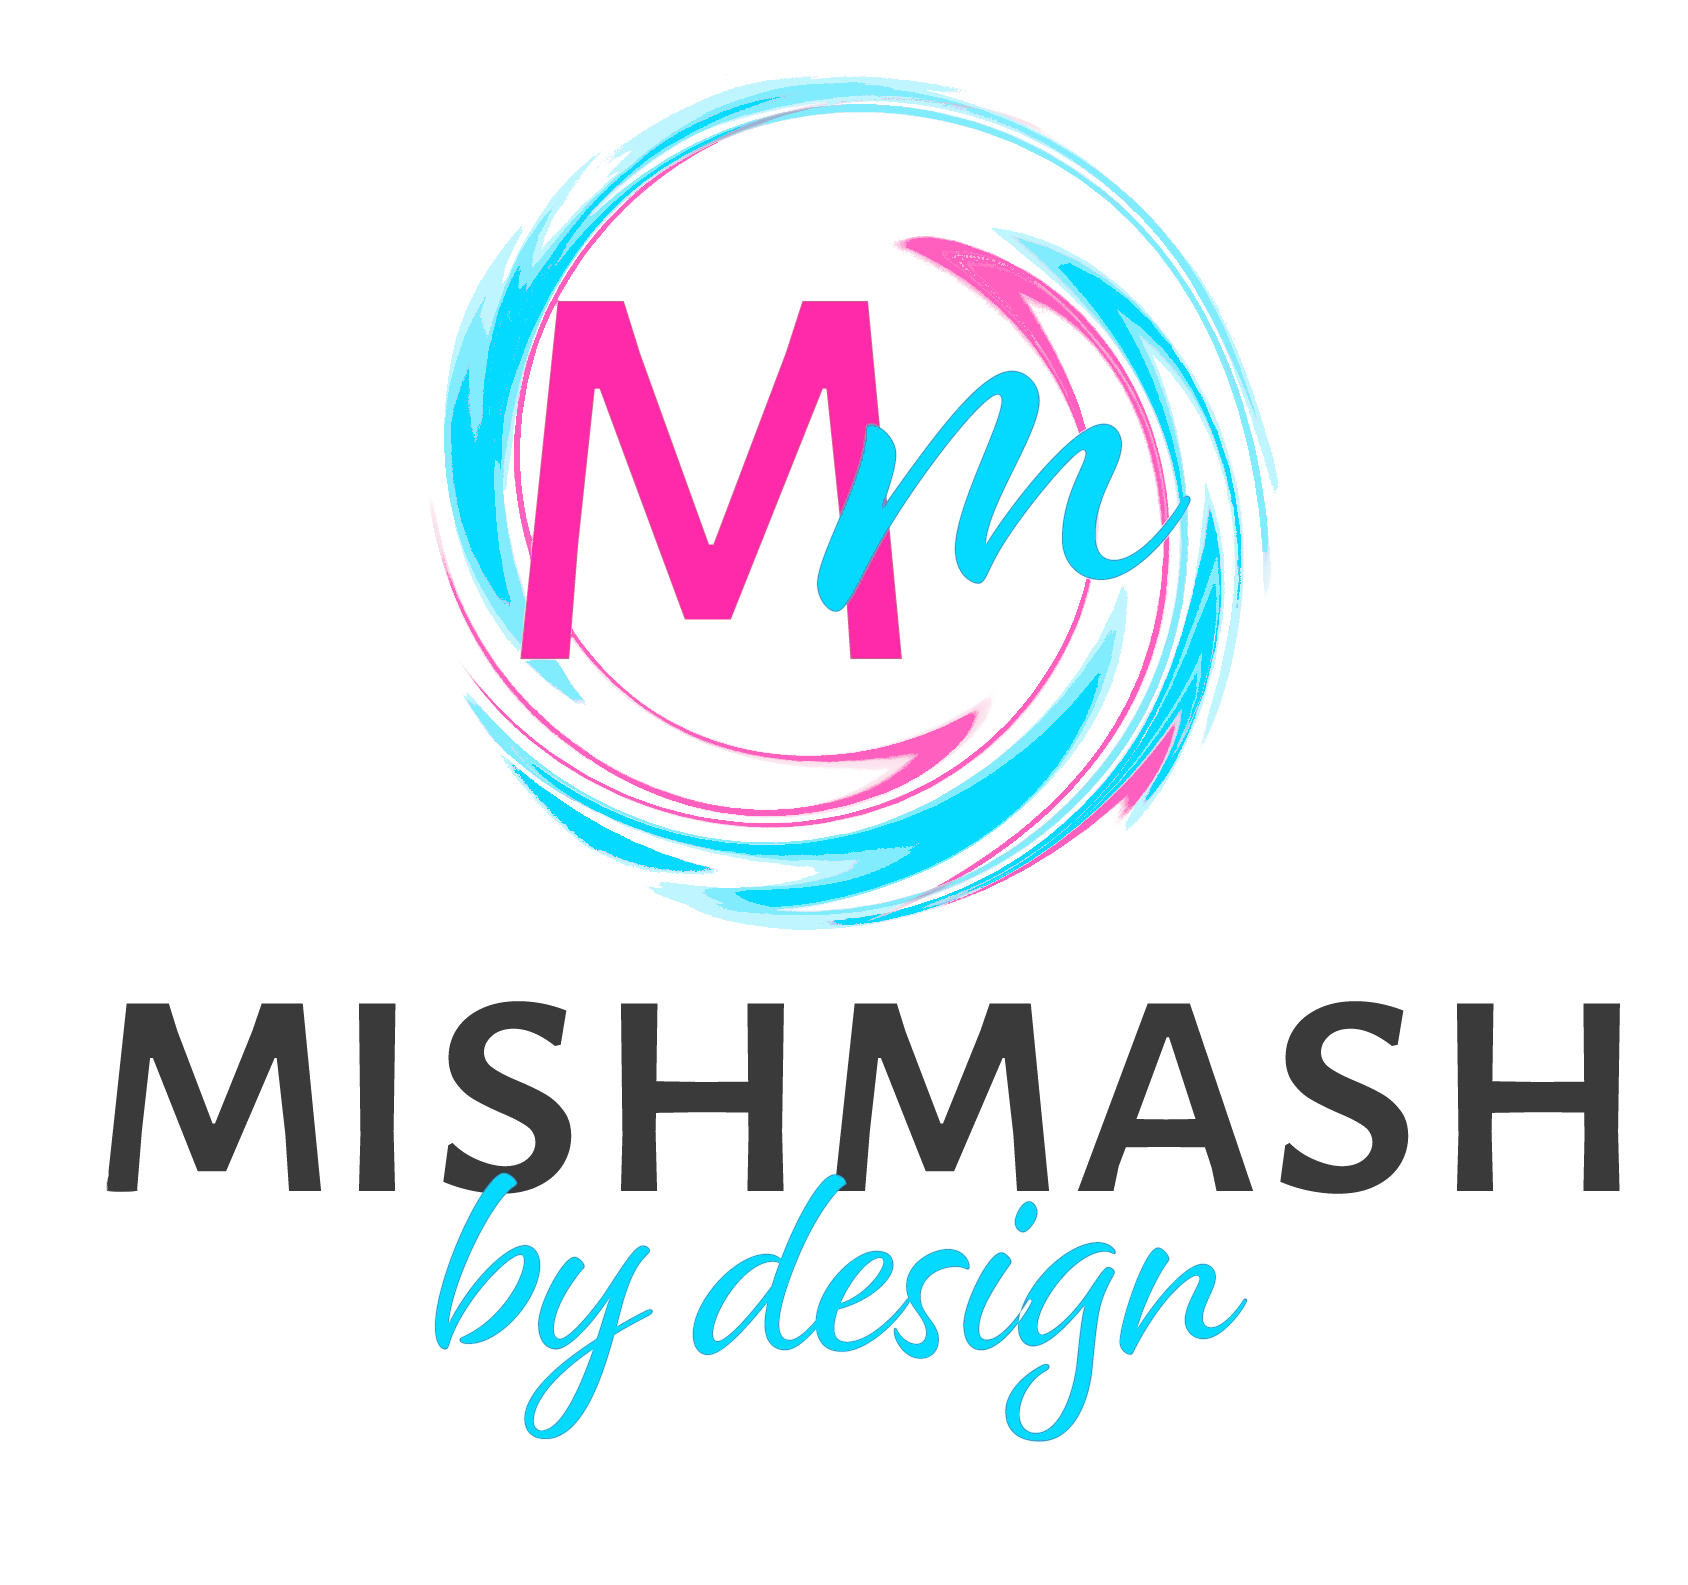 MishMash by design logo